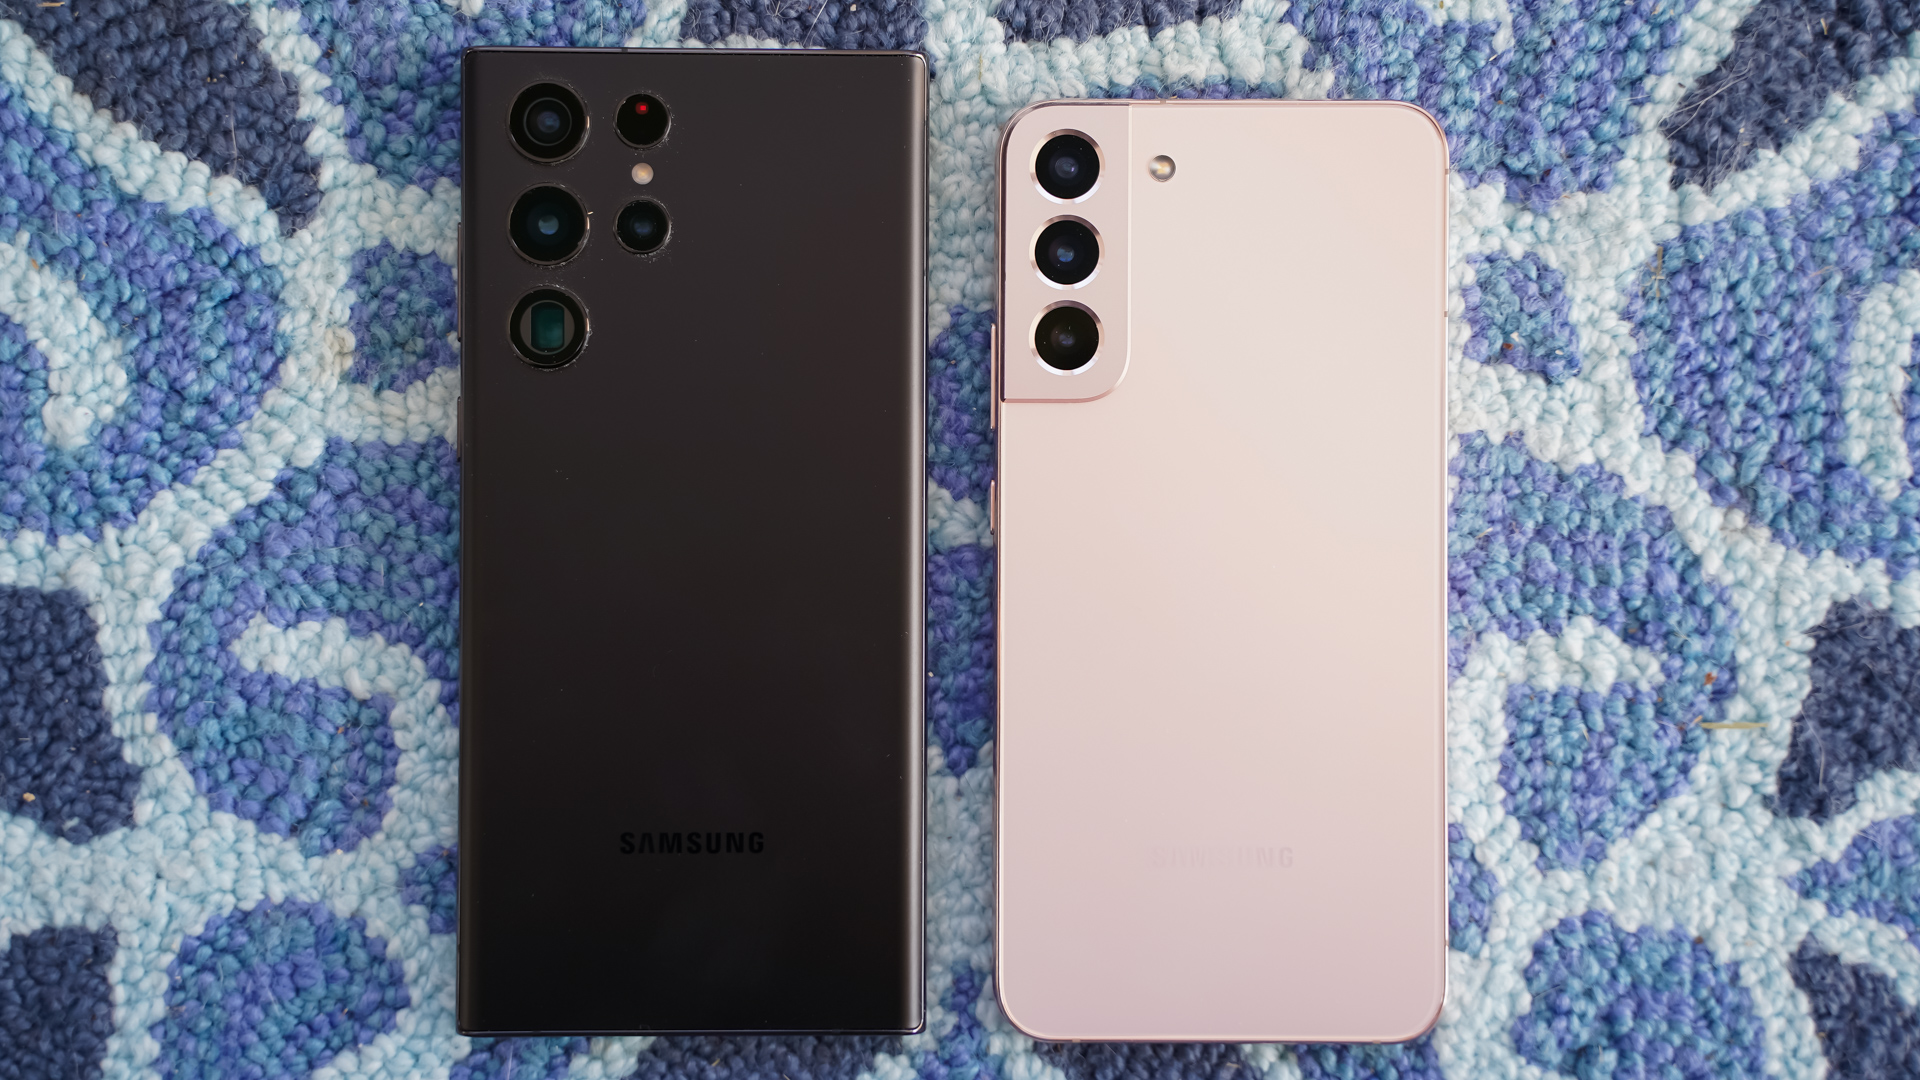 Samsung Galaxy S22 Ultra hitam vs Samsung Galaxy S22 Plus belakang merah muda di atas karpet